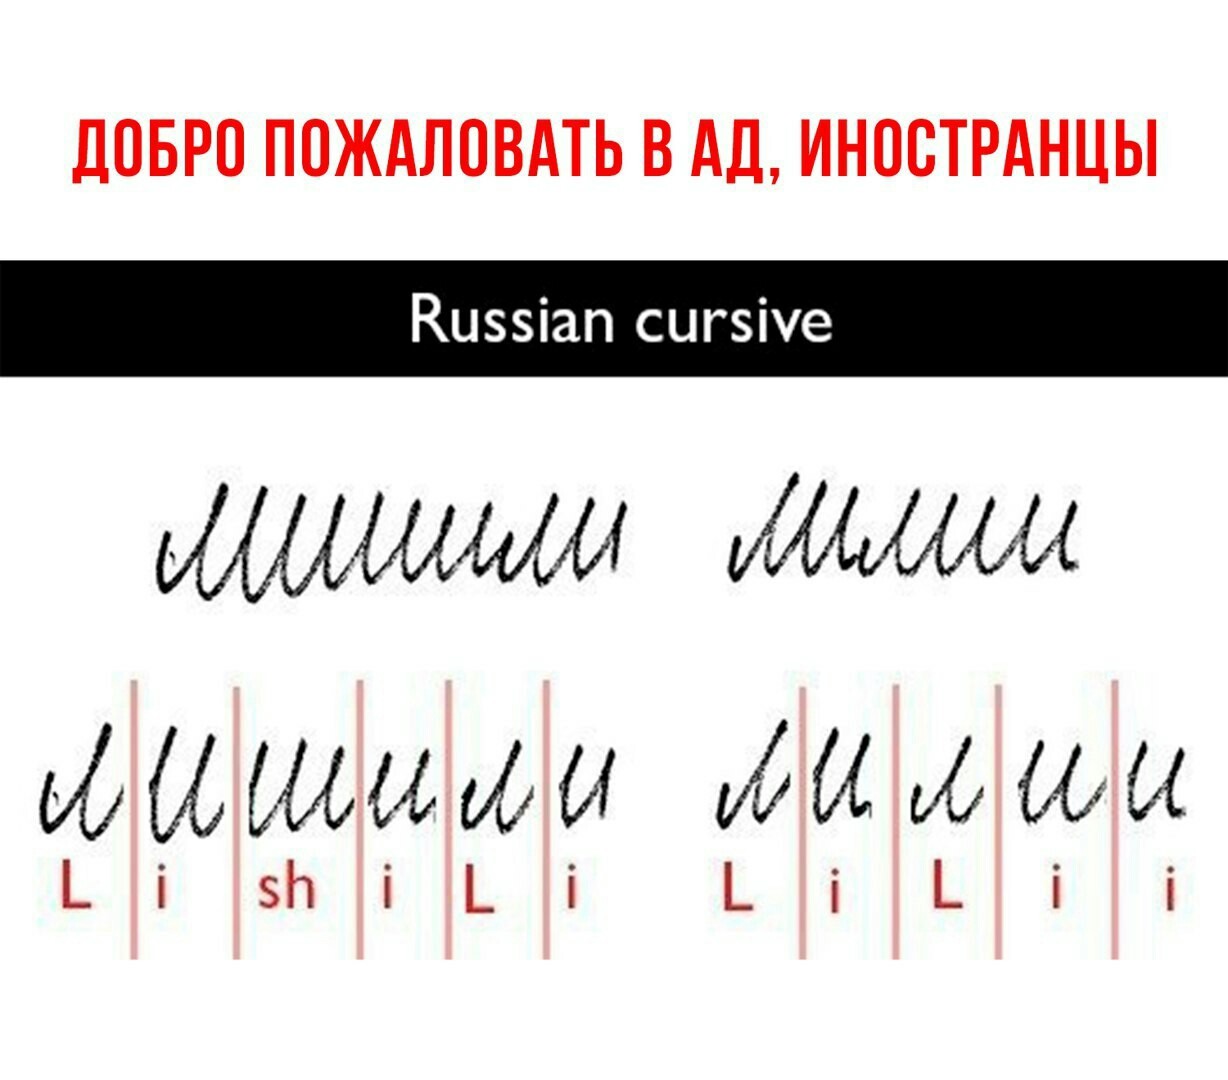 Russian cursive problems